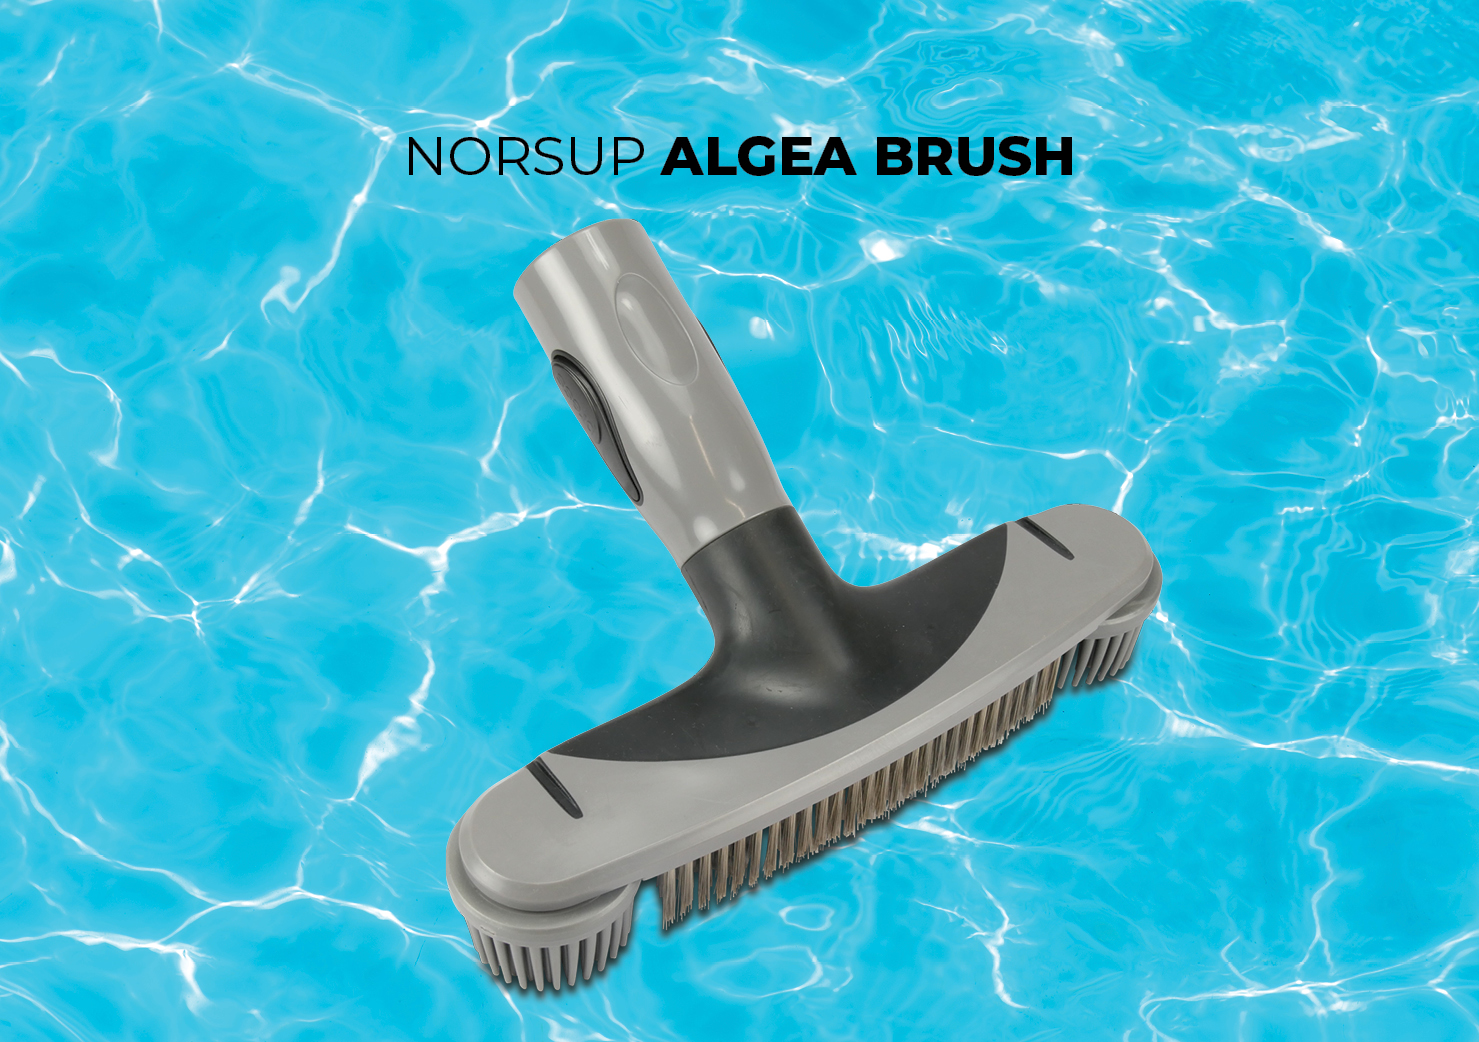 Norsup algea brush